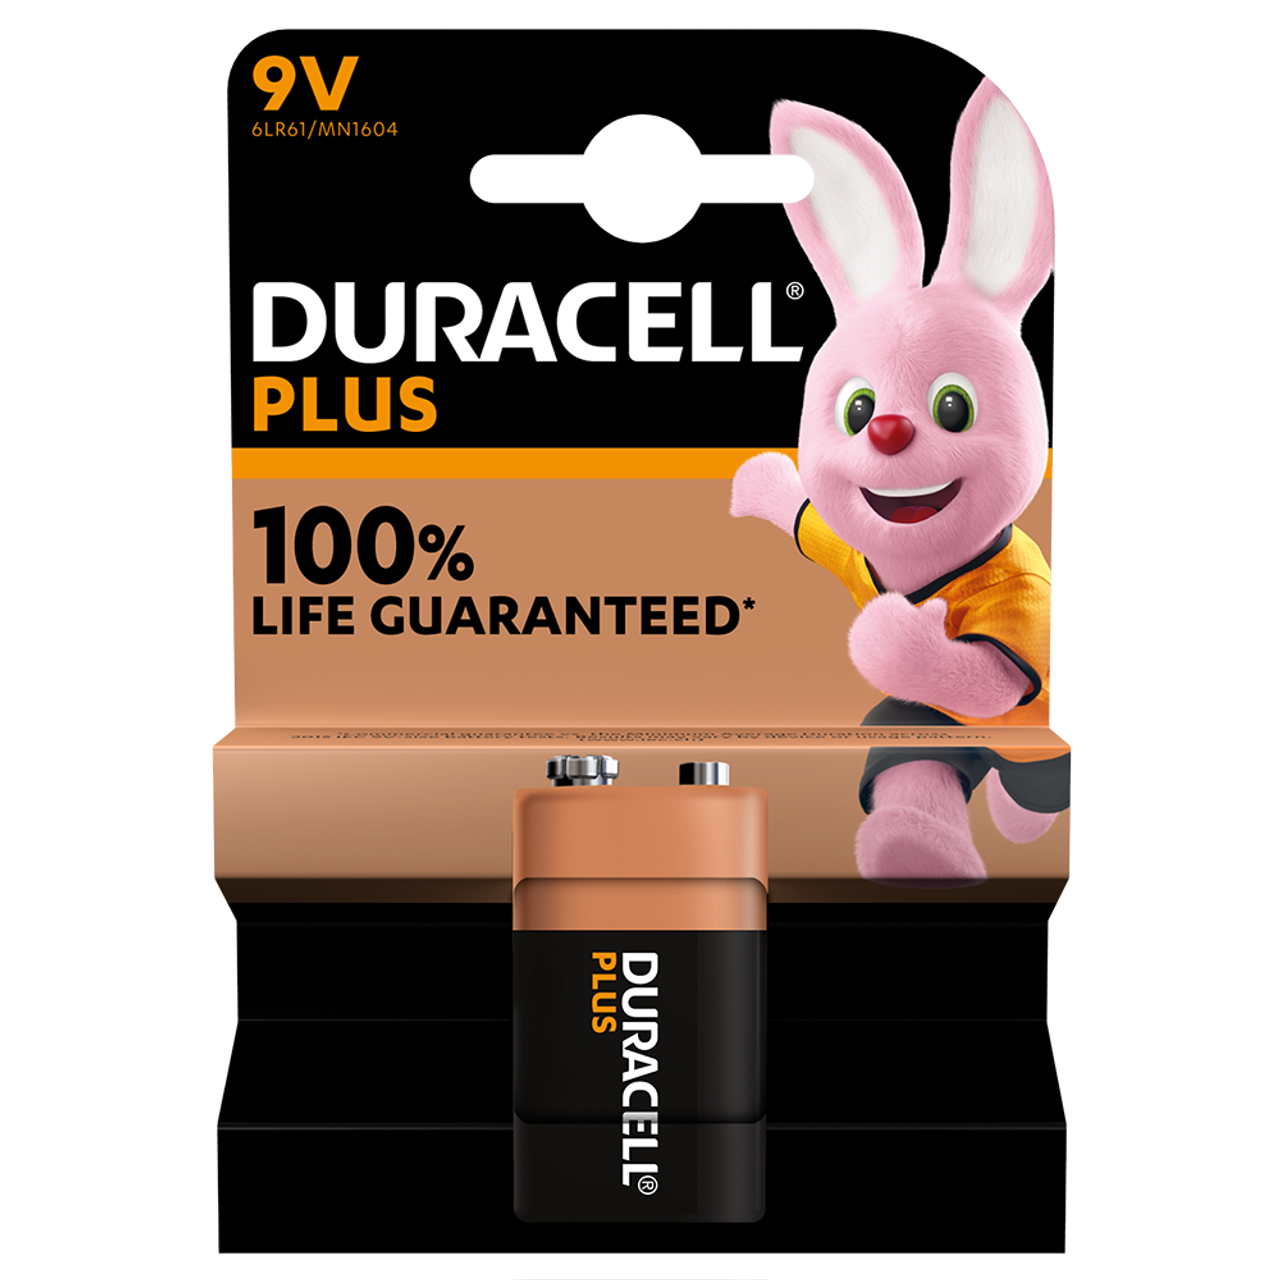 Duracell Plus 9v Battery, Duracell Plus PP3 Battery